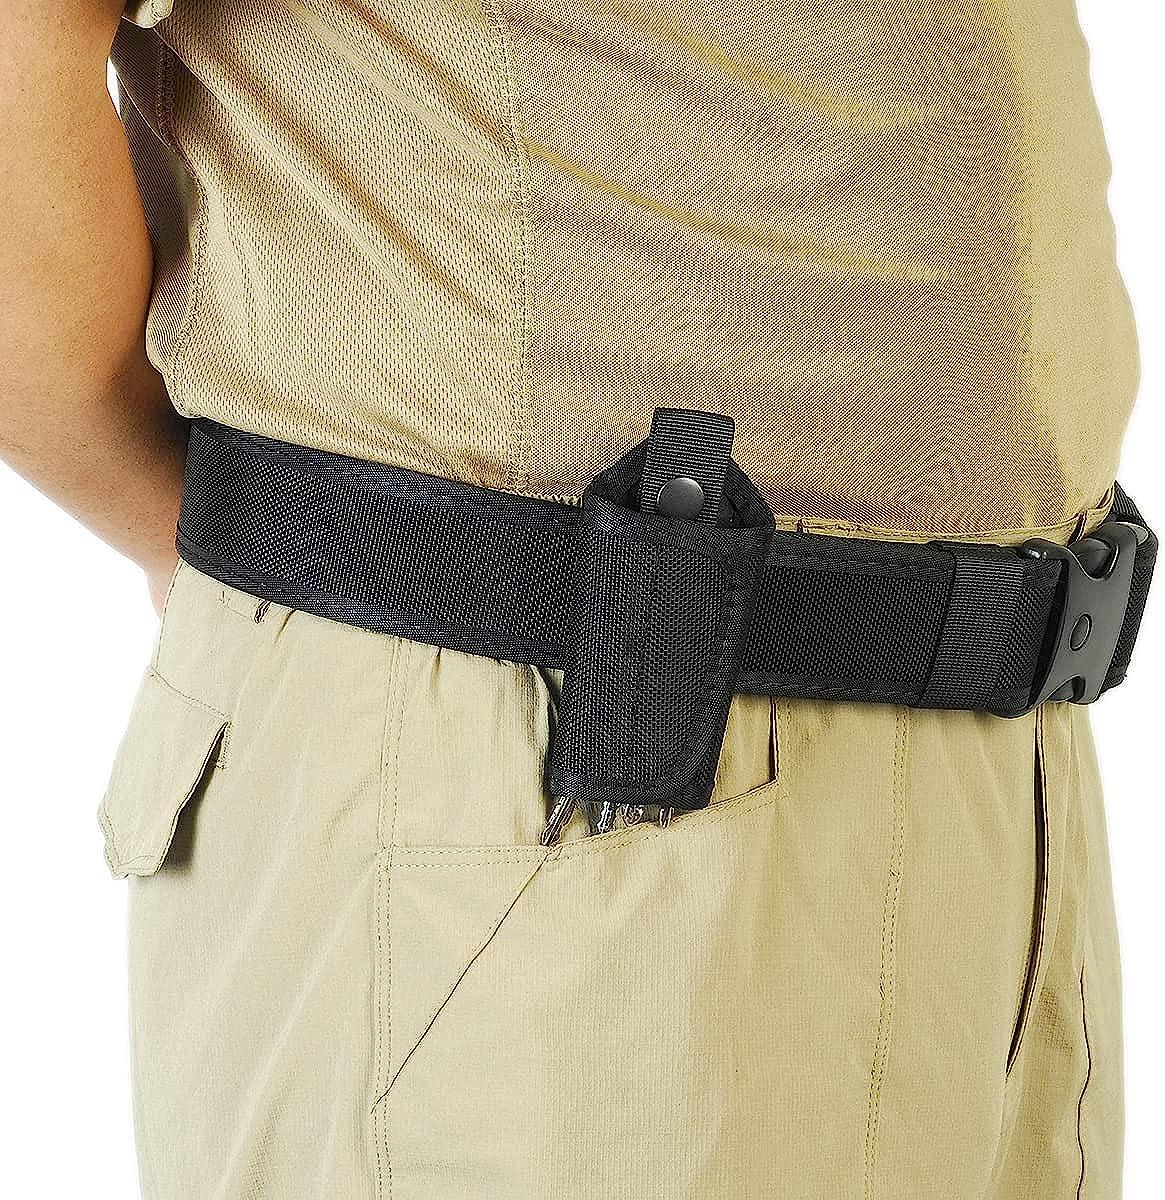 Leather Key Pouch for Belt, Key Holder for Duty Belt